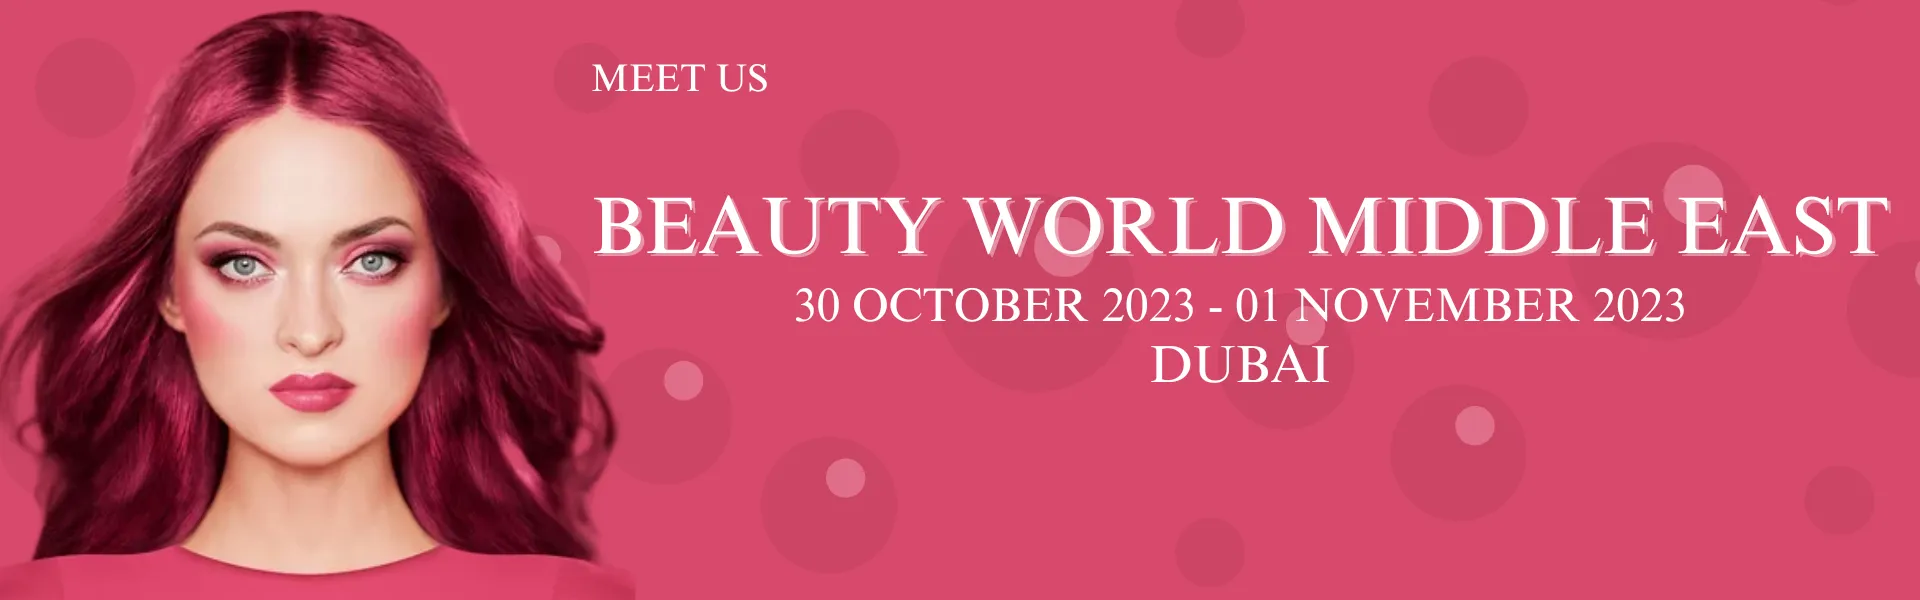 Beautyworld Middle East - www.dkihenna.com